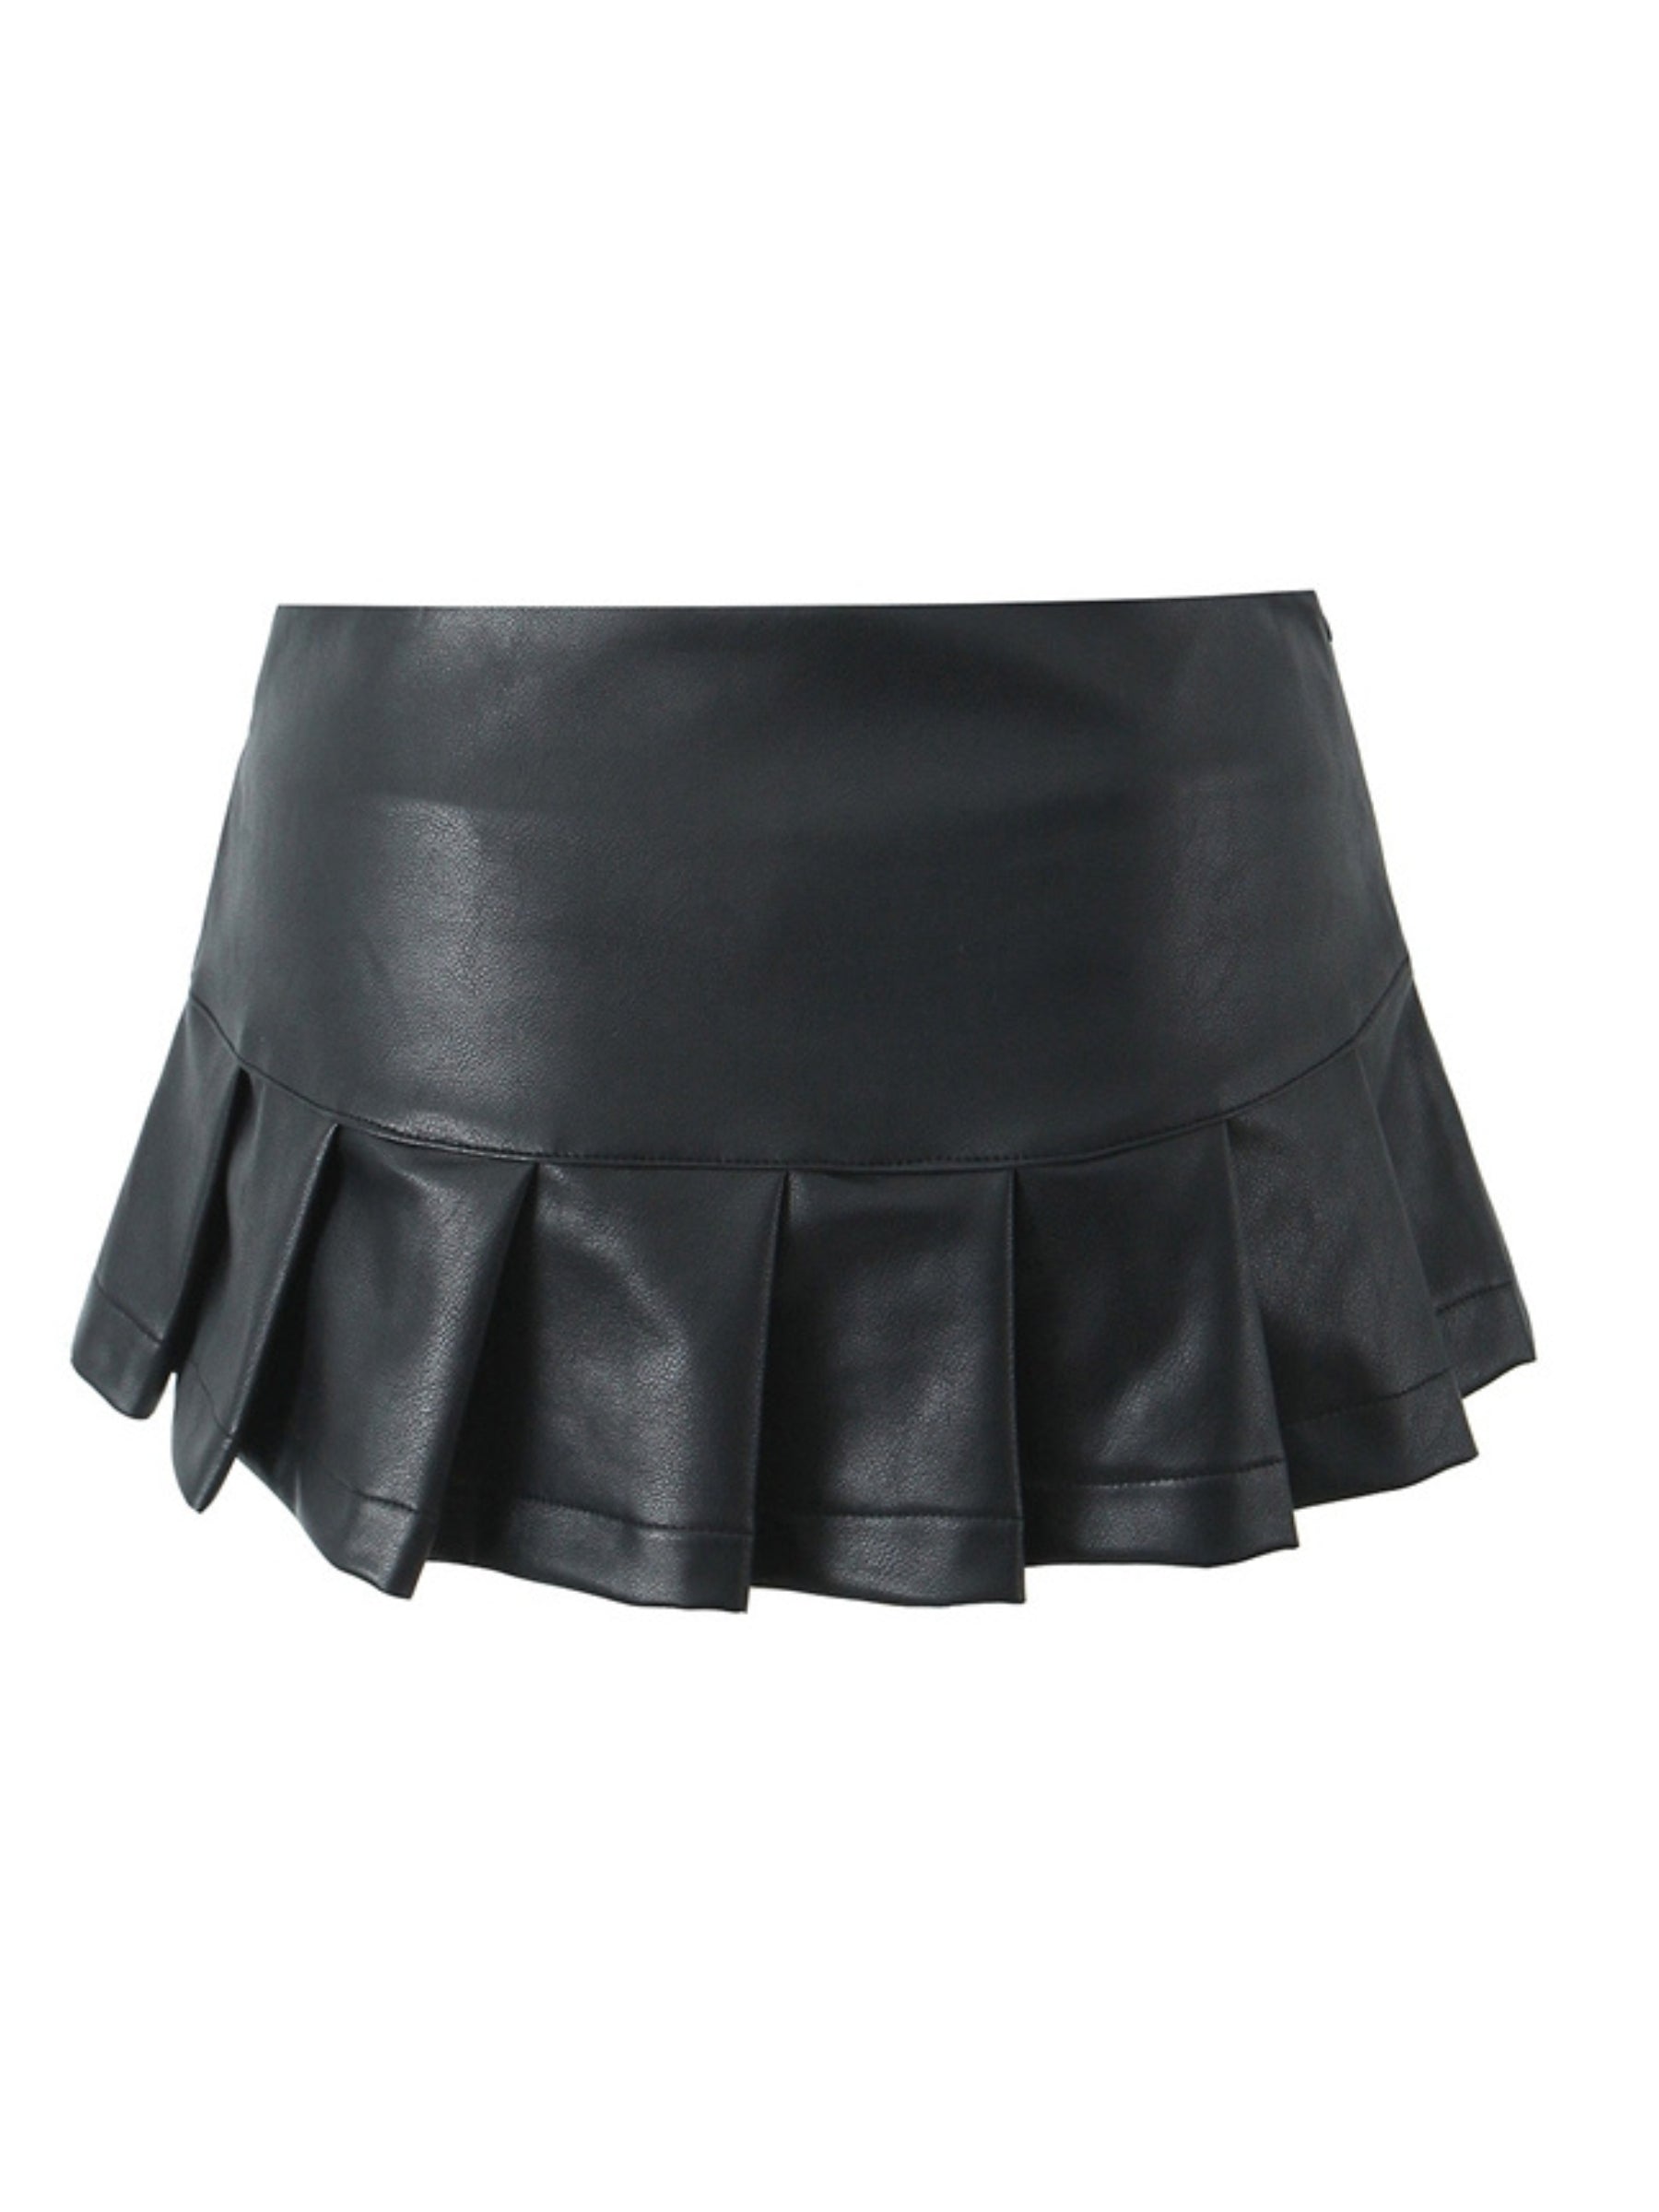 LaPose Fashion - Ersa Pleated Mini Skirt - A-Line Skirts, College Skirts, Mini Skirts, Pleated Skirts, Short Skirts, Skirts